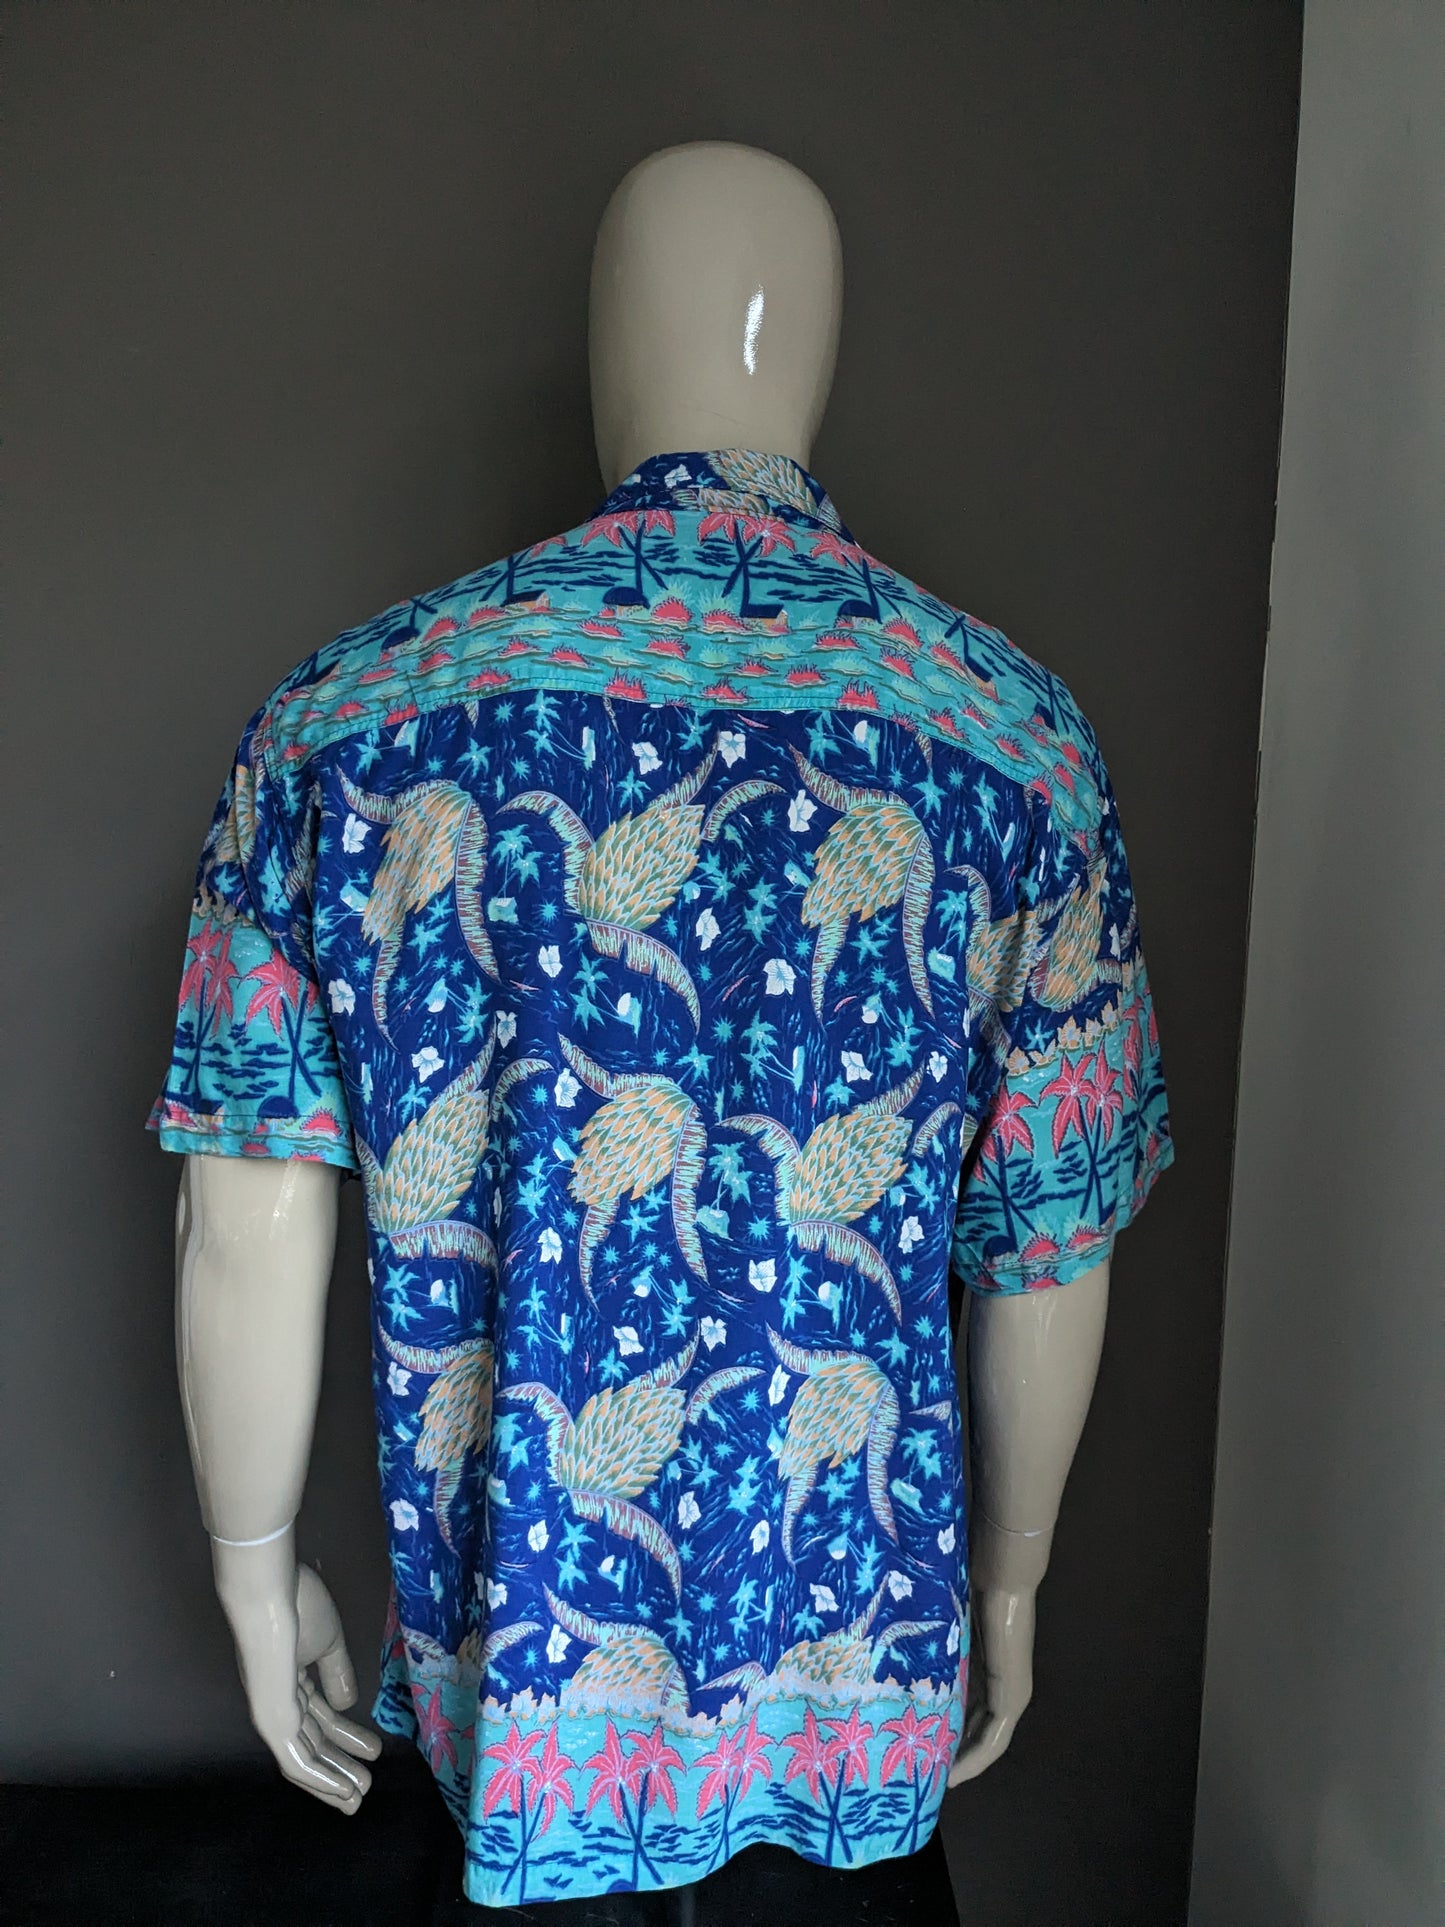 Rainbow Jo Maui Original Hawaii Shirt Sleeve. Impression verte rose orange bleu. Taille xl.